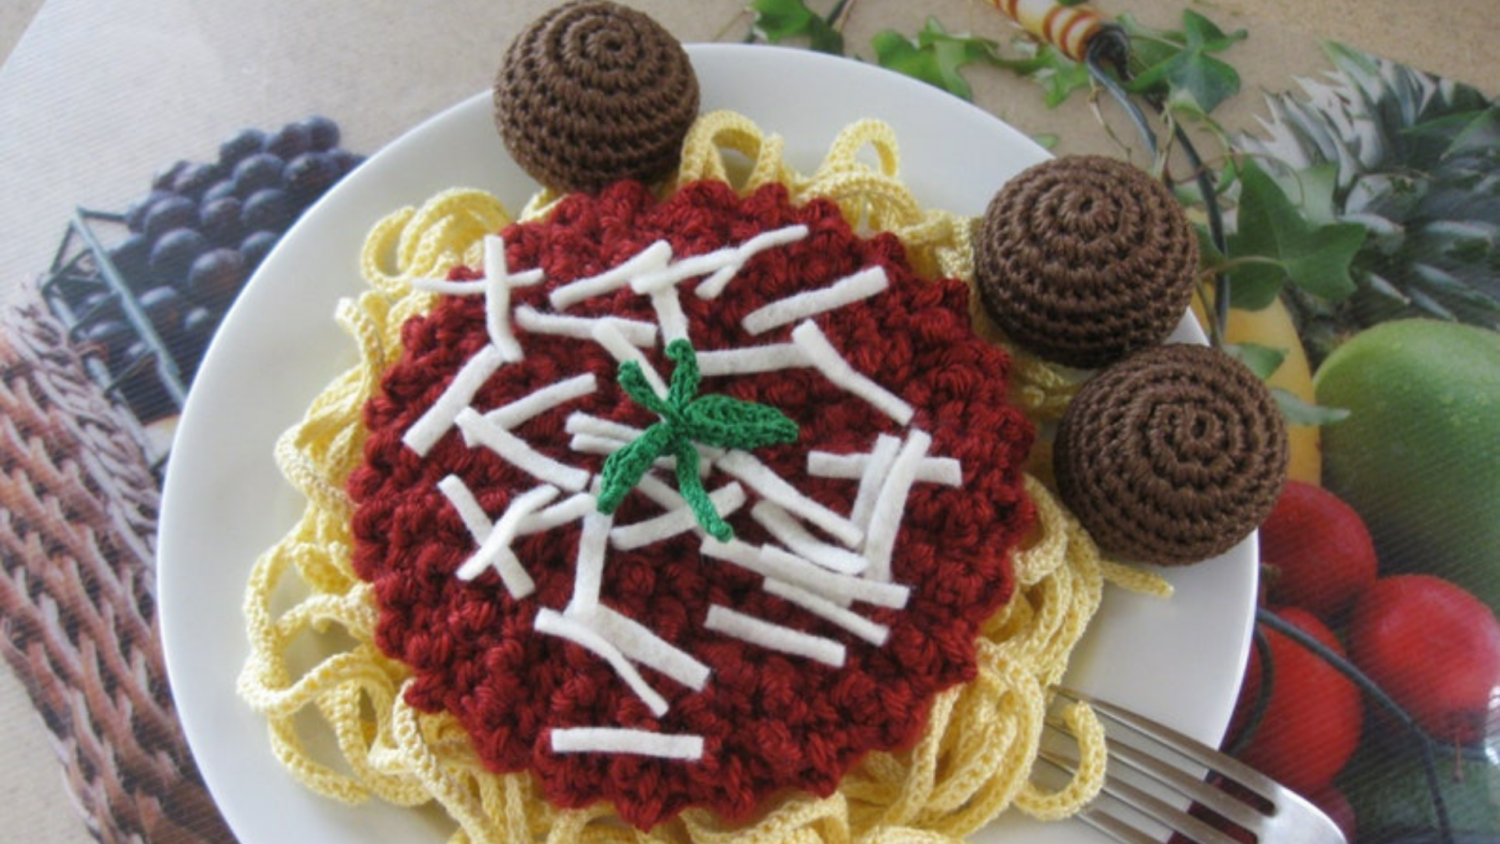 Crochet spaghetti pasta with meatballs